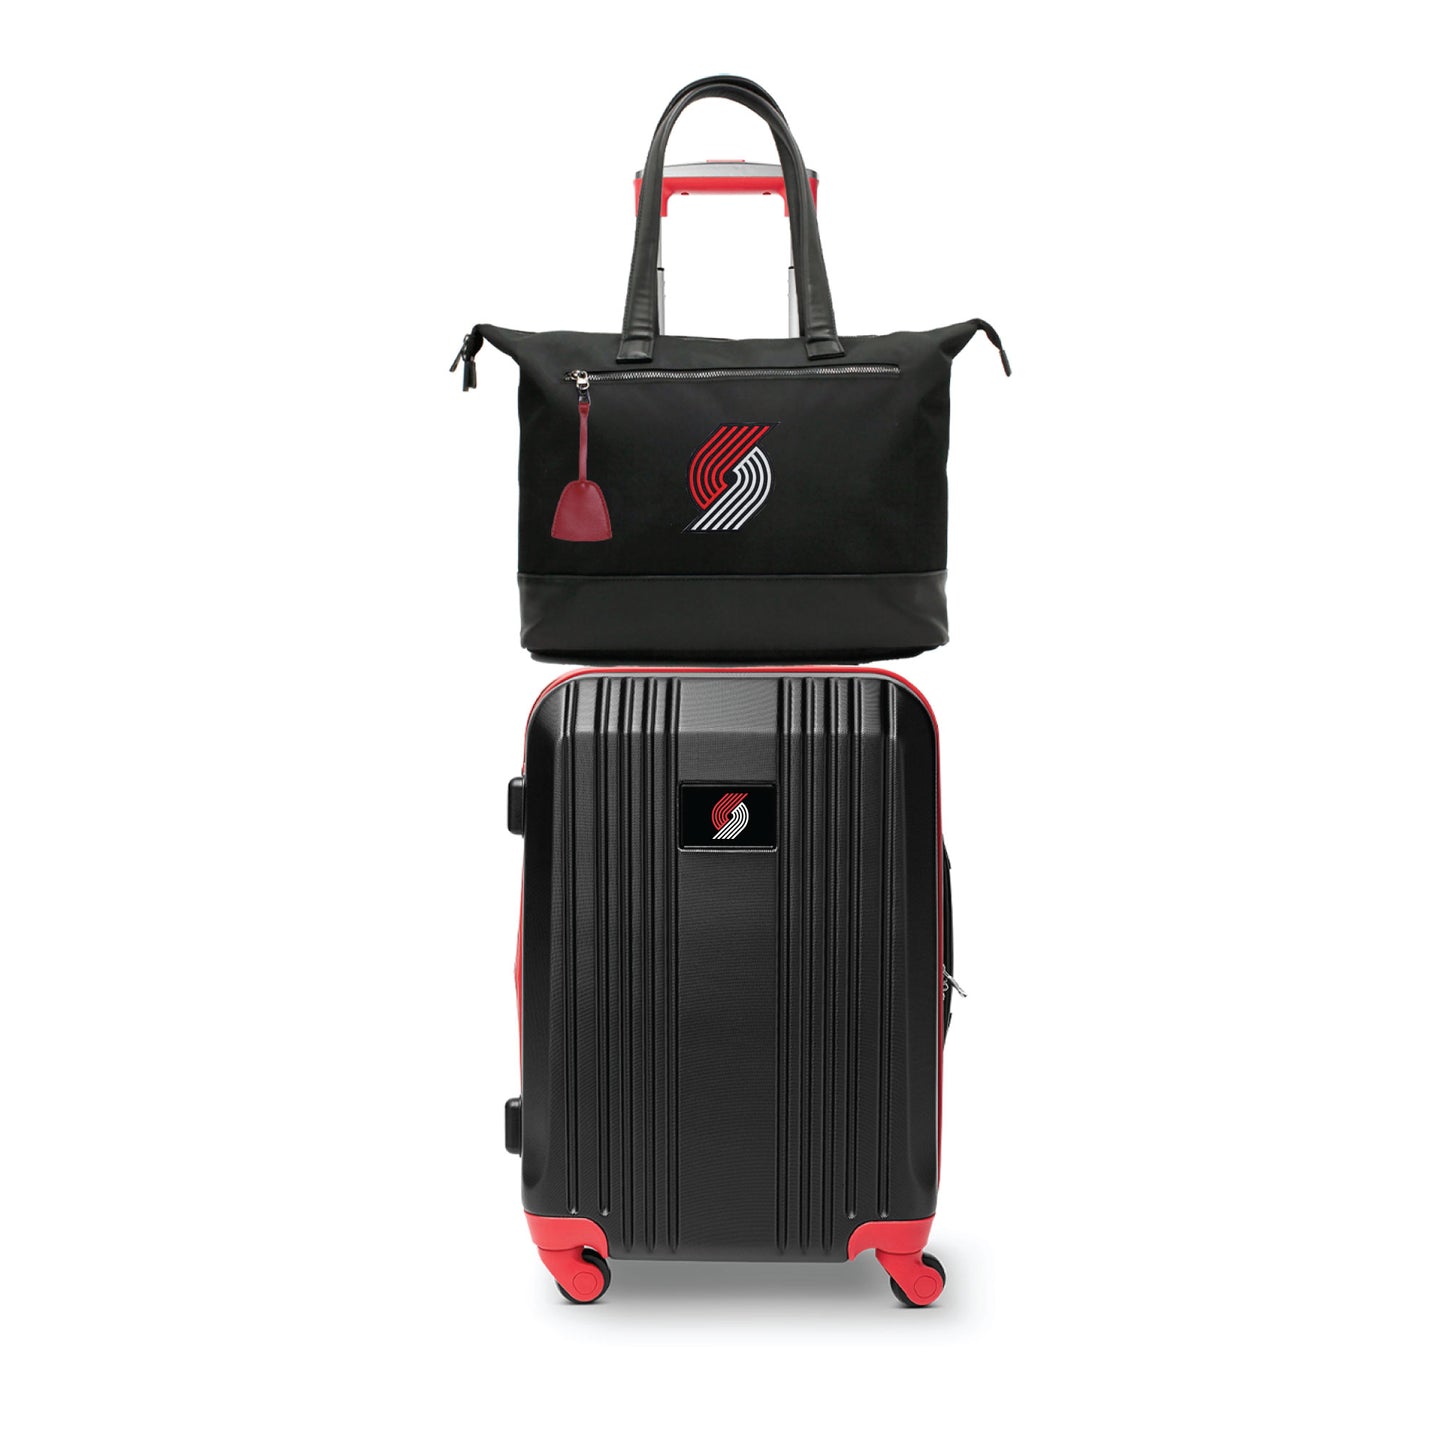 Portland Trail Blazers Premium Laptop Tote Bag and Luggage Set